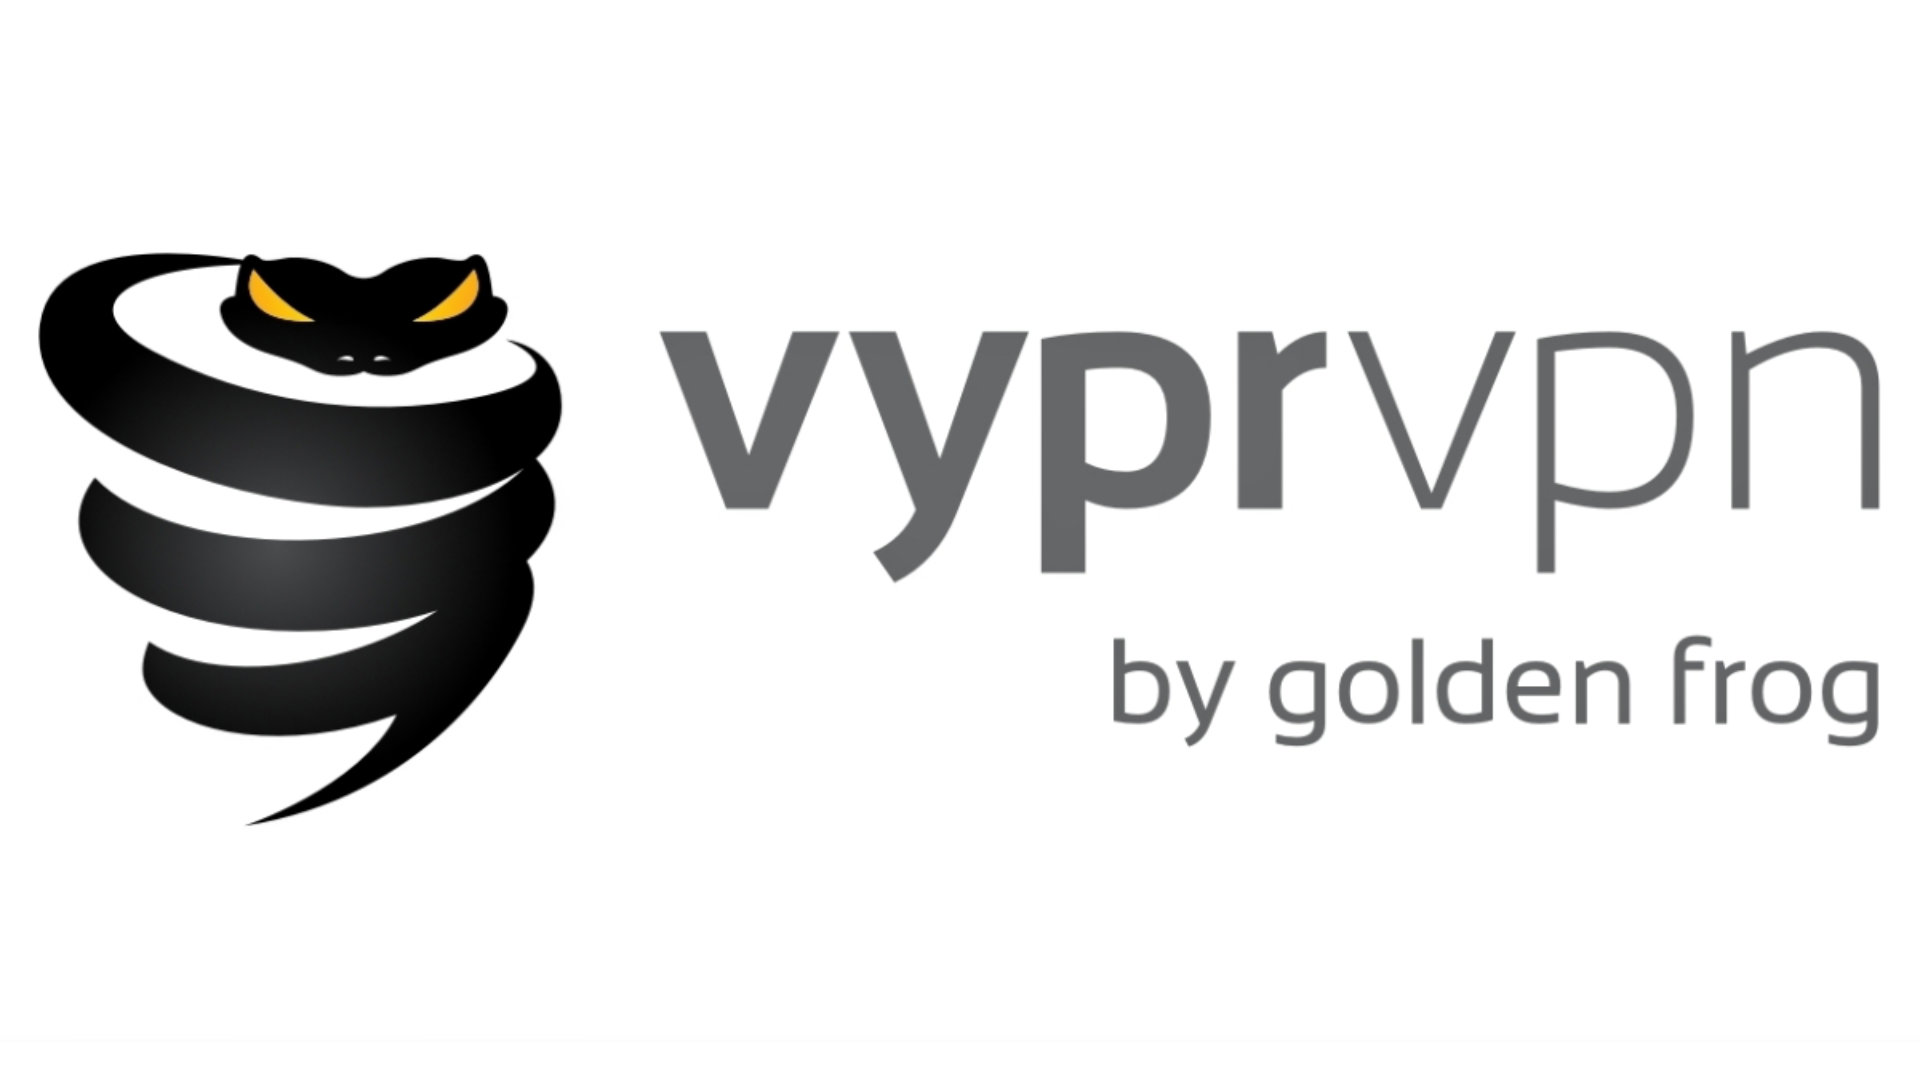 VPN costs for VyprVPN. Image shows the company logo.